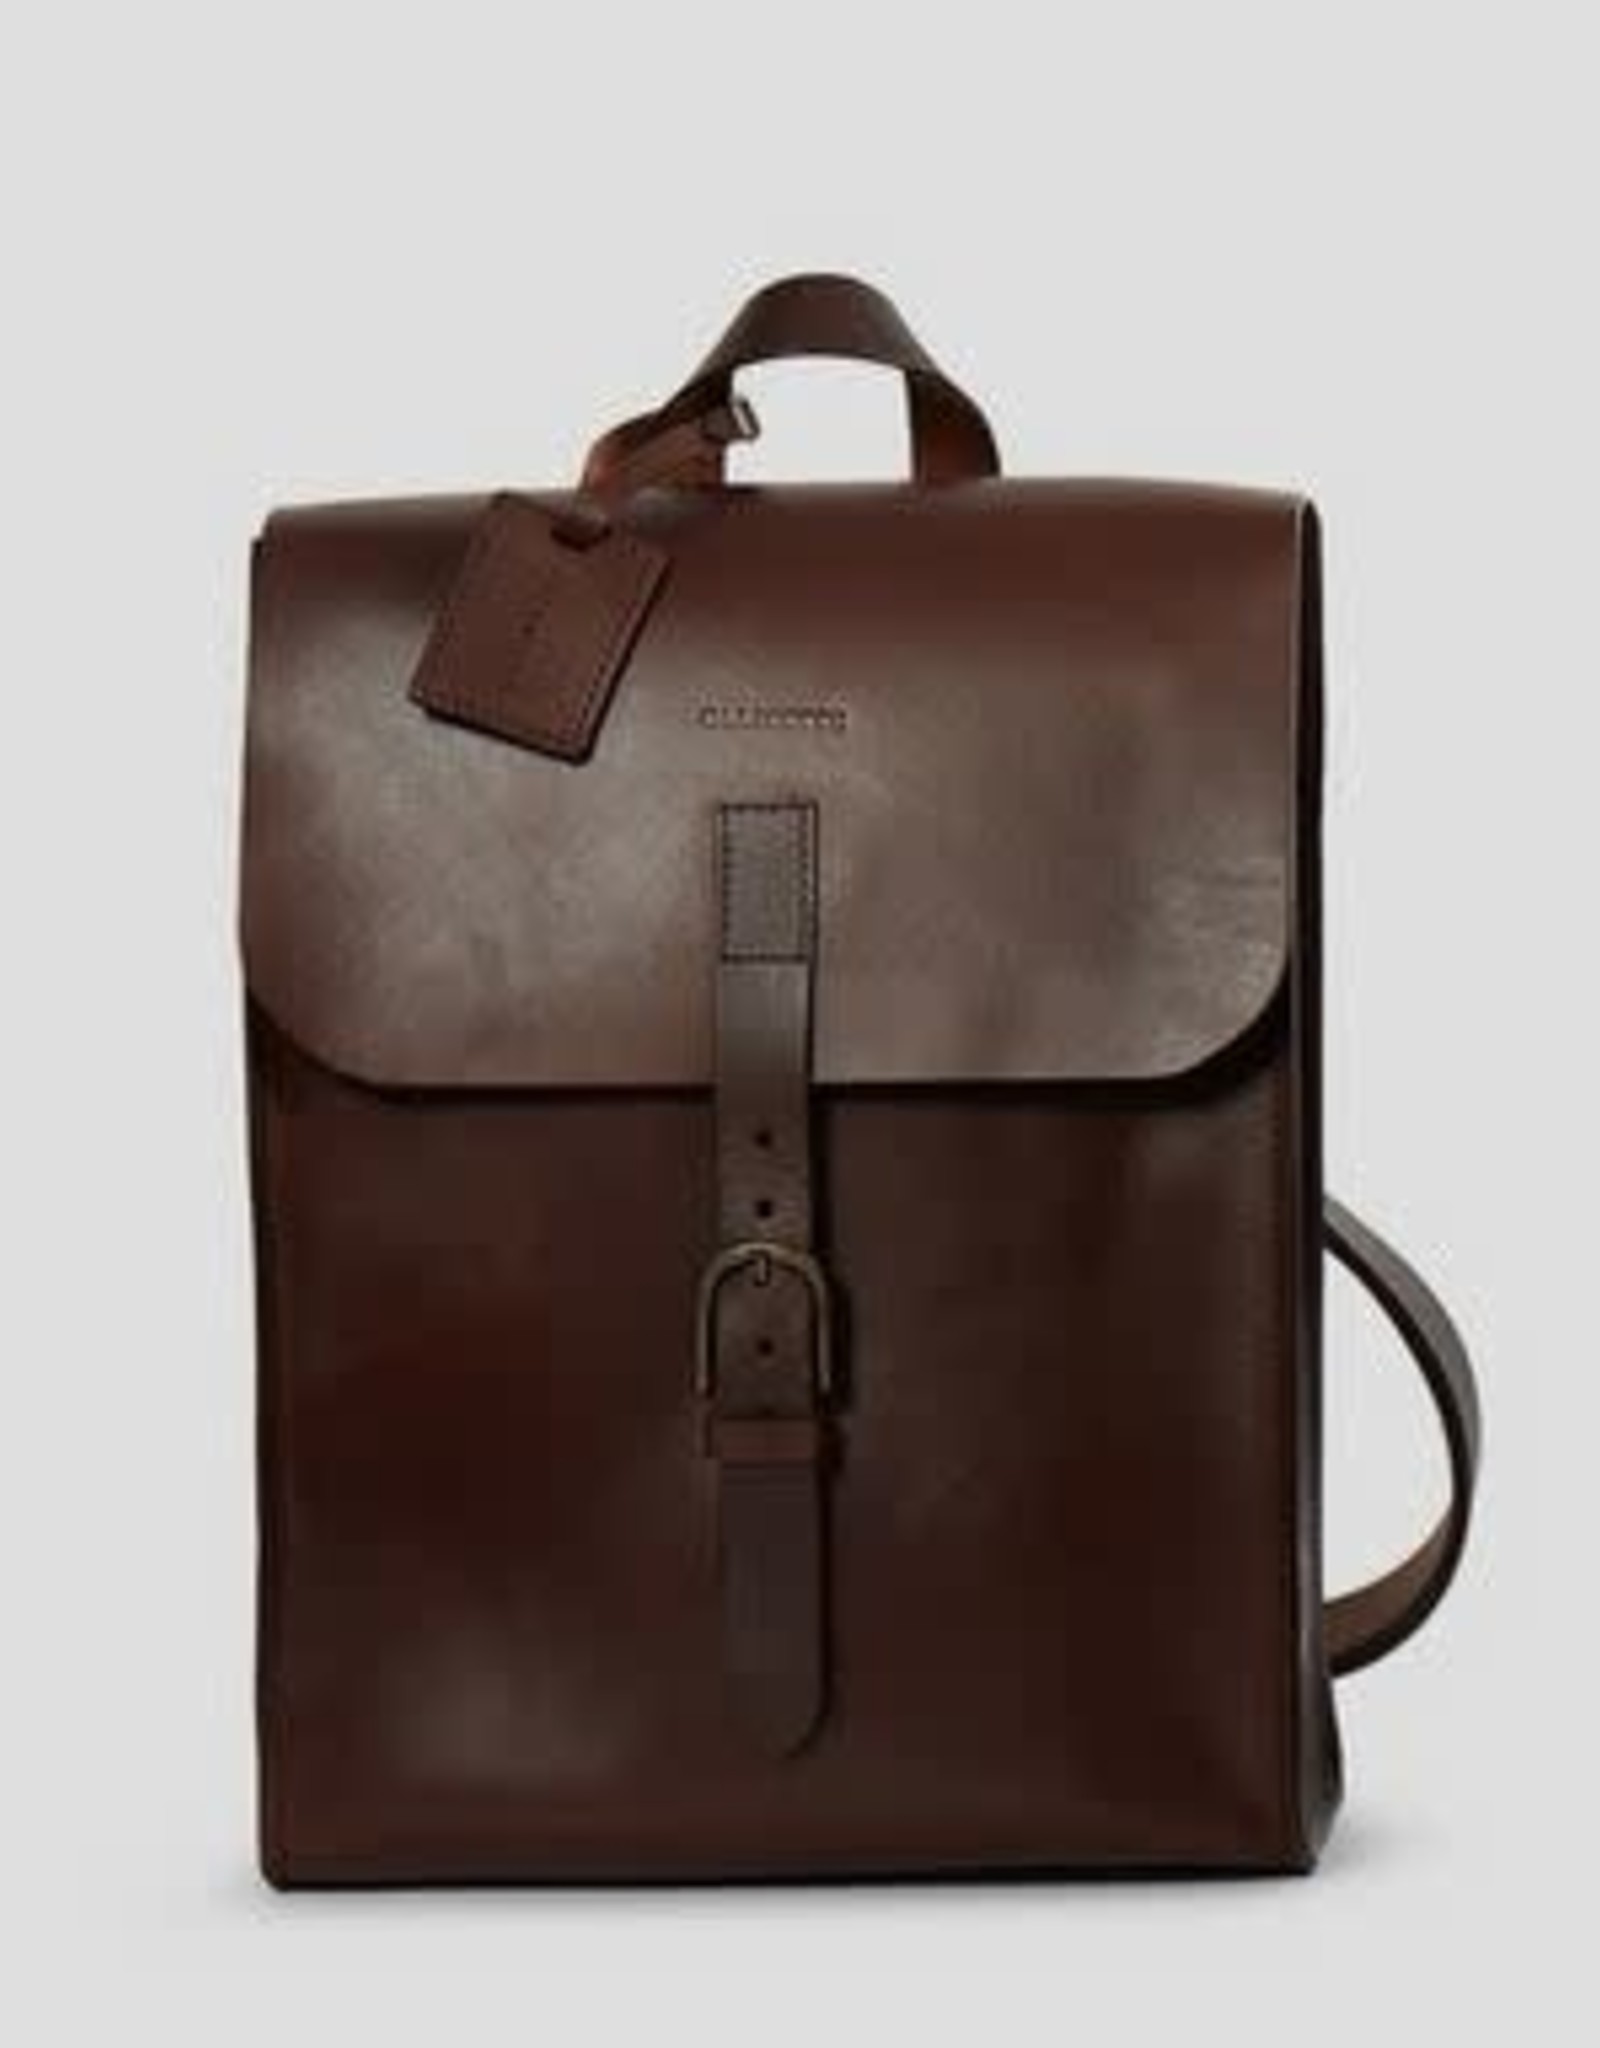 Ollivette Sahara - Leather Backpack